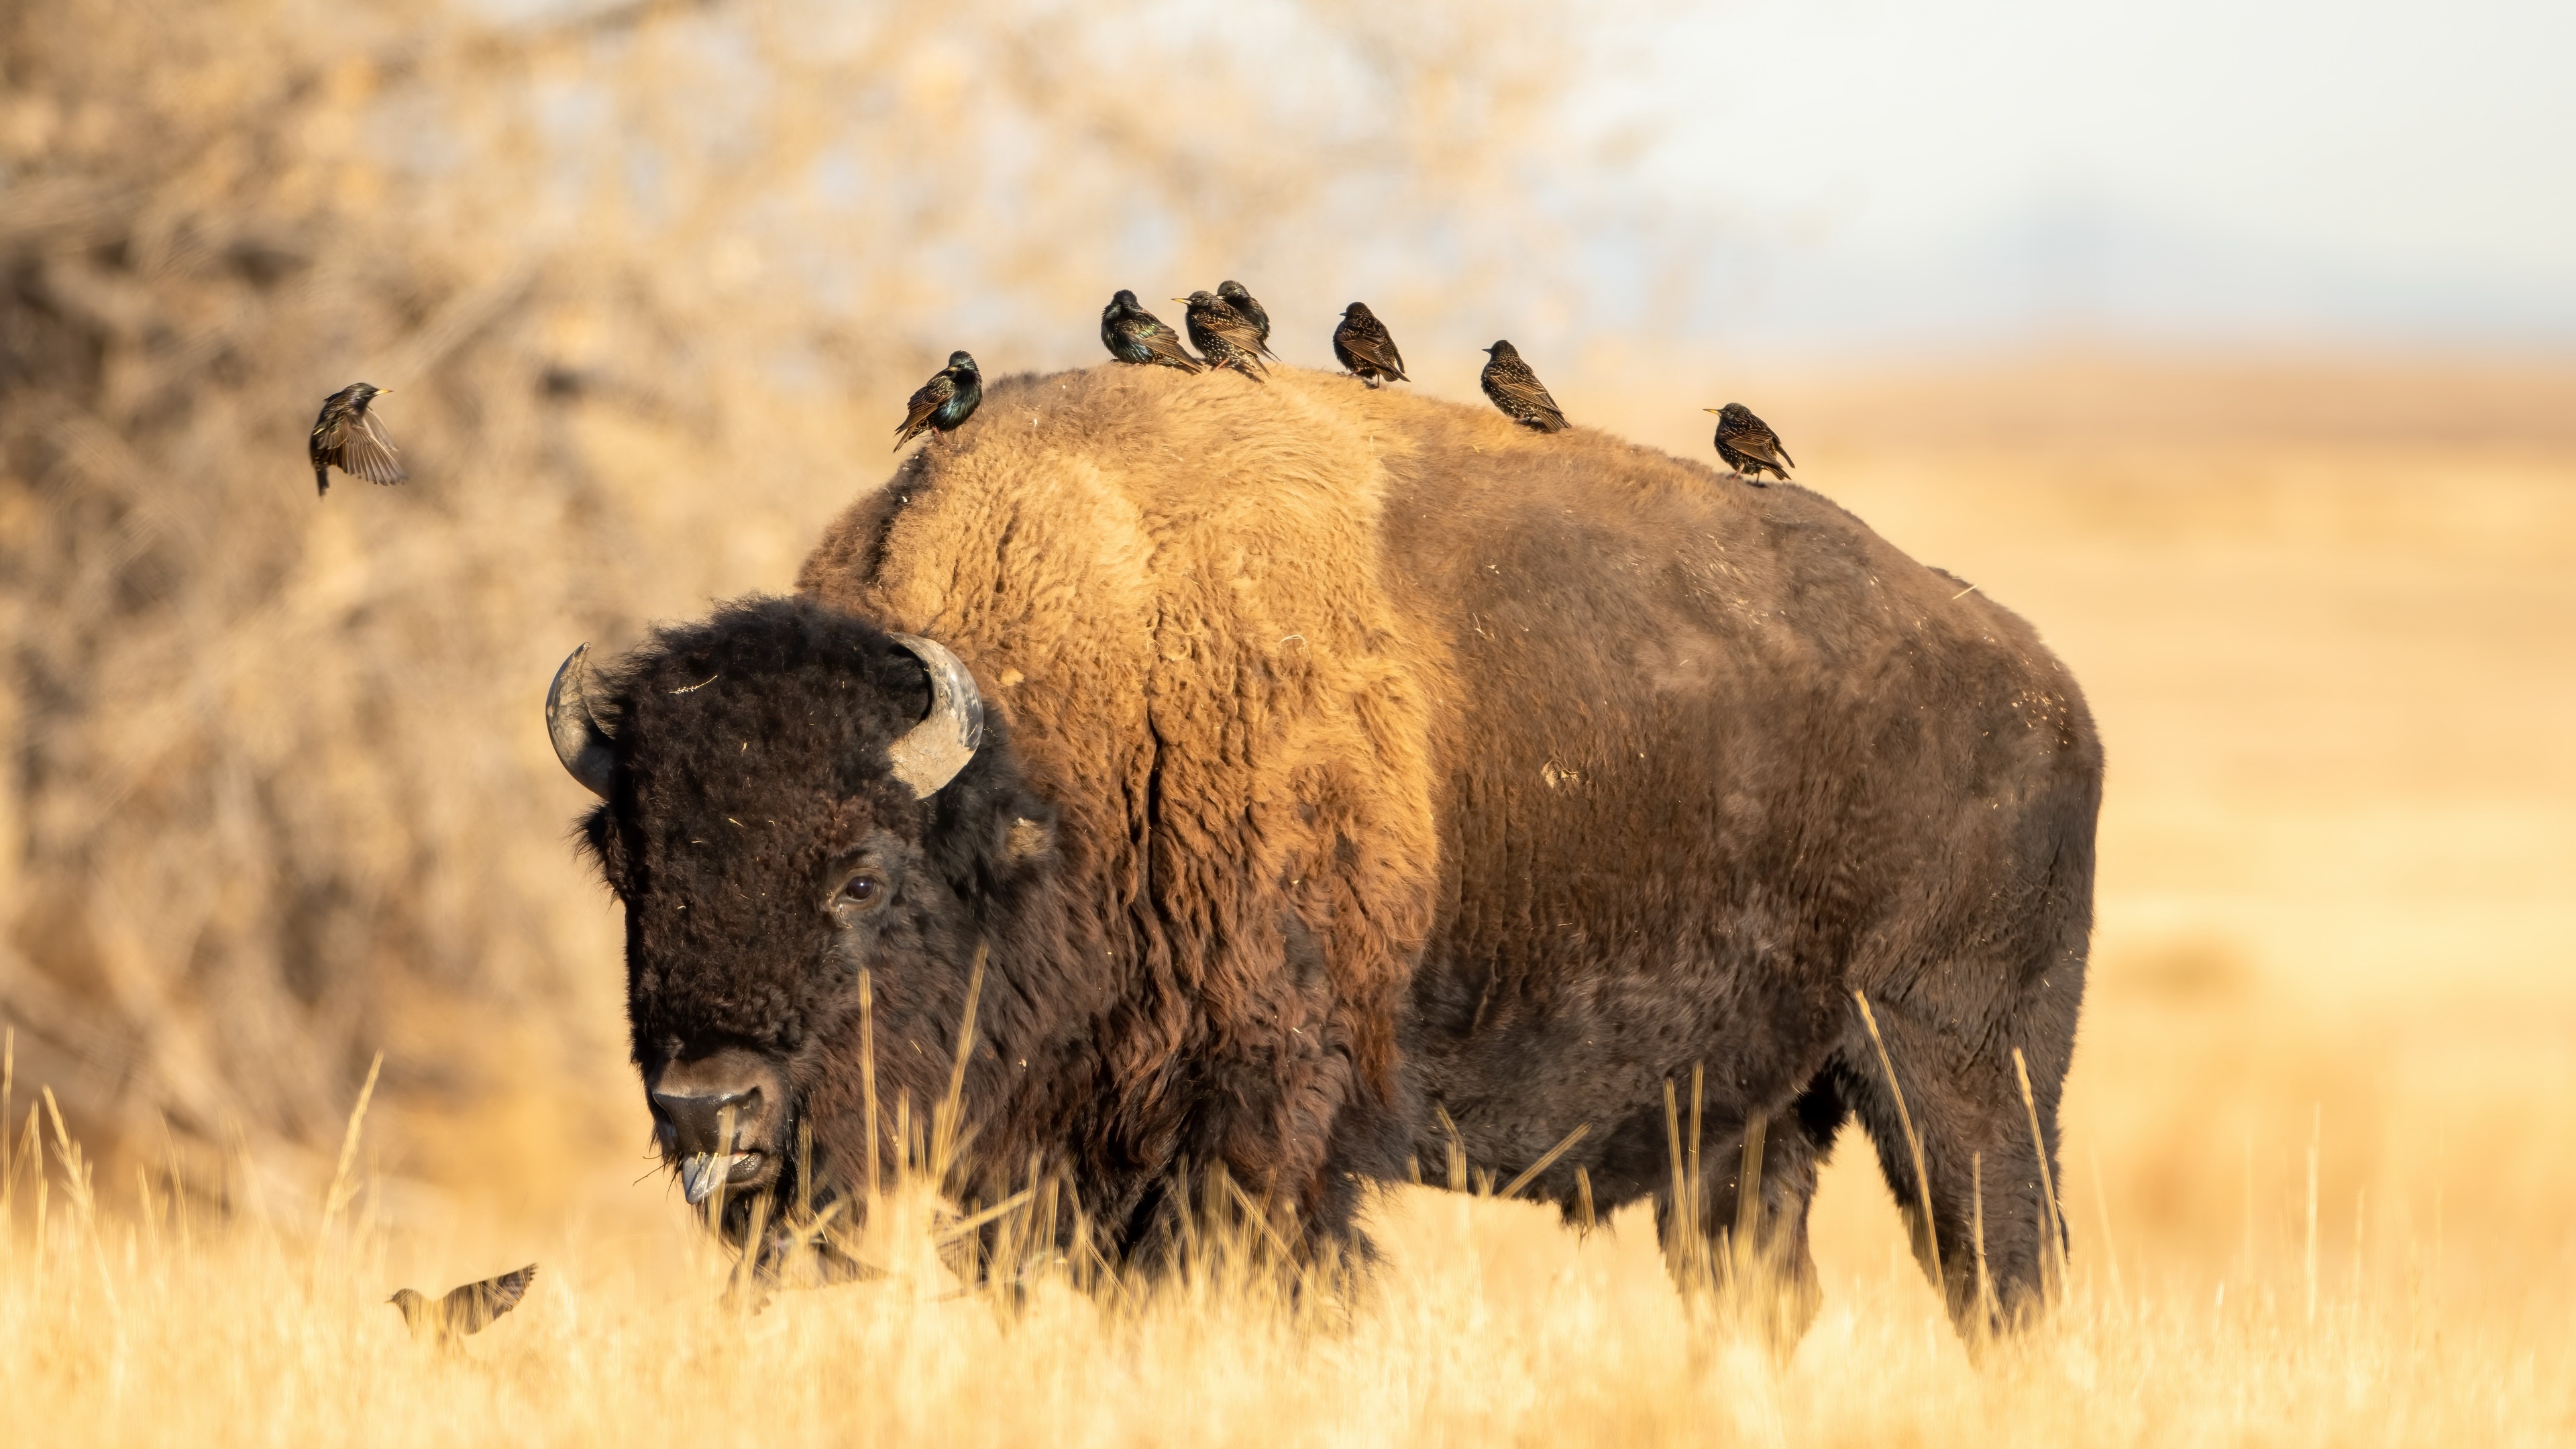 4K American bison wallpapers, High-resolution bison backgrounds, Stunning buffalo imagery, Captivating bison pictures, 3840x2160 4K Desktop